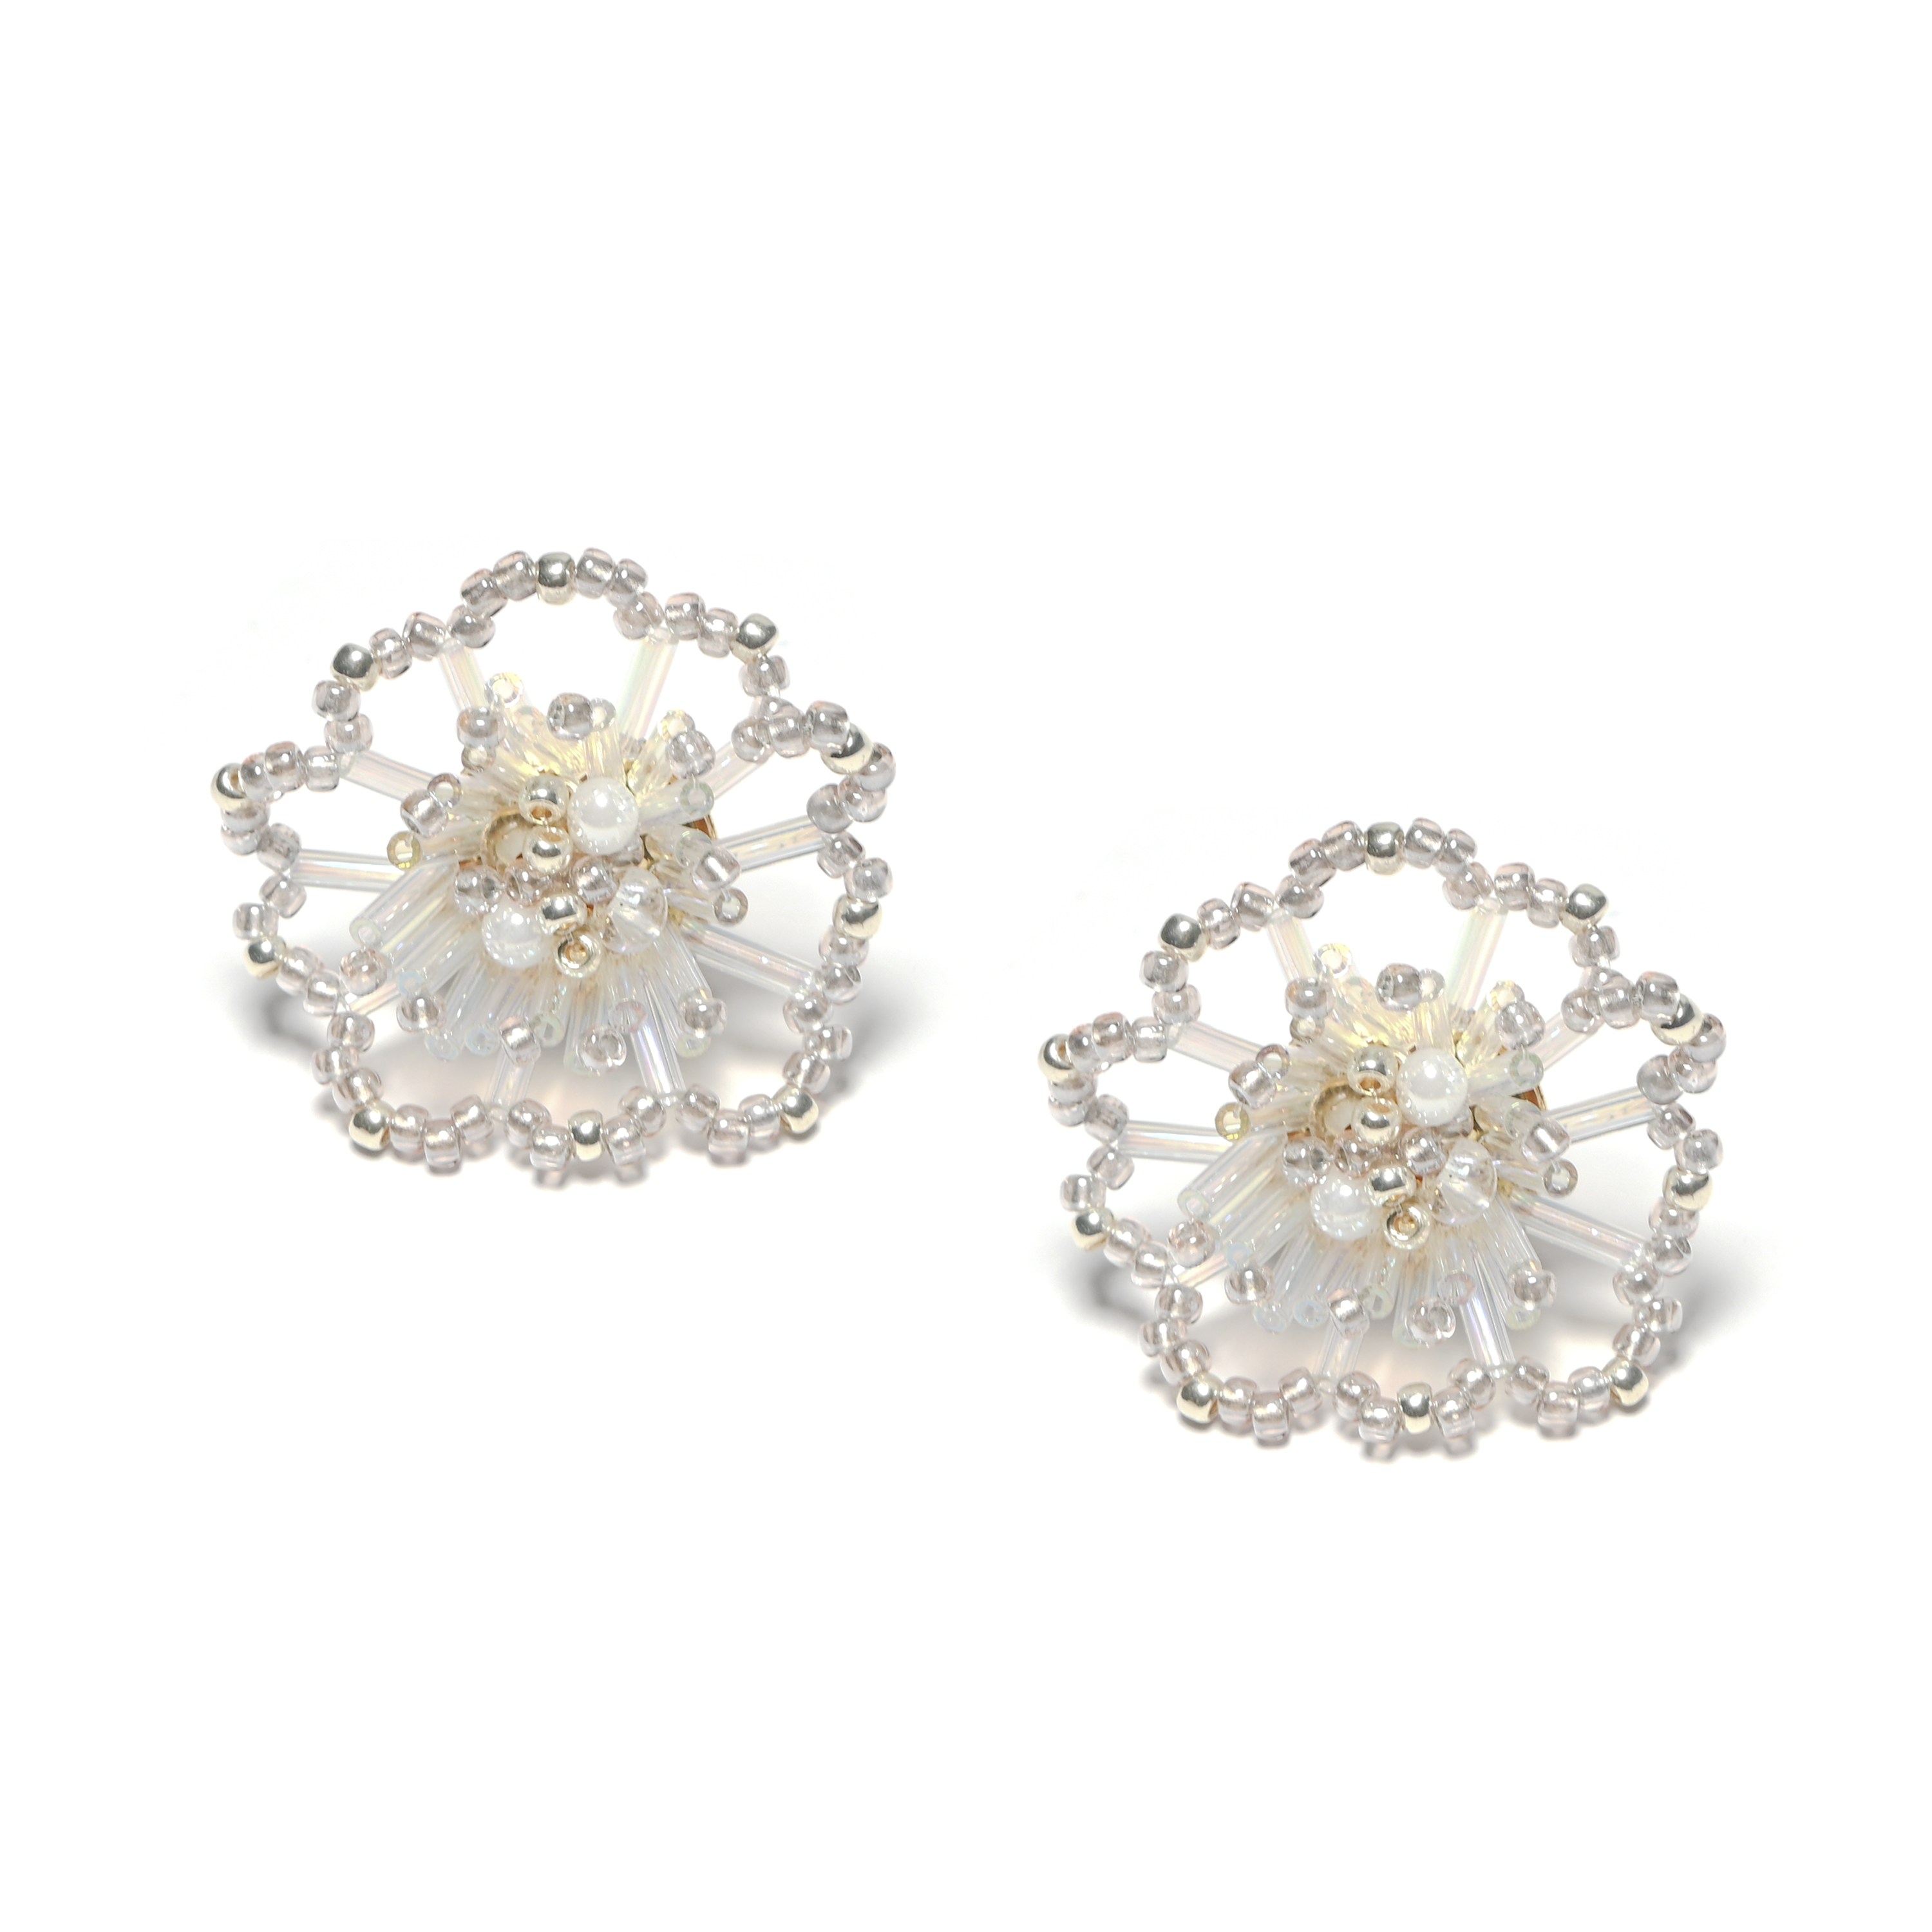 Beaded Larkspur Shaped Earrings 14K Gold 925 Silver Handmade Earring, “Flowers” for Women, The Gift That Never Fades.